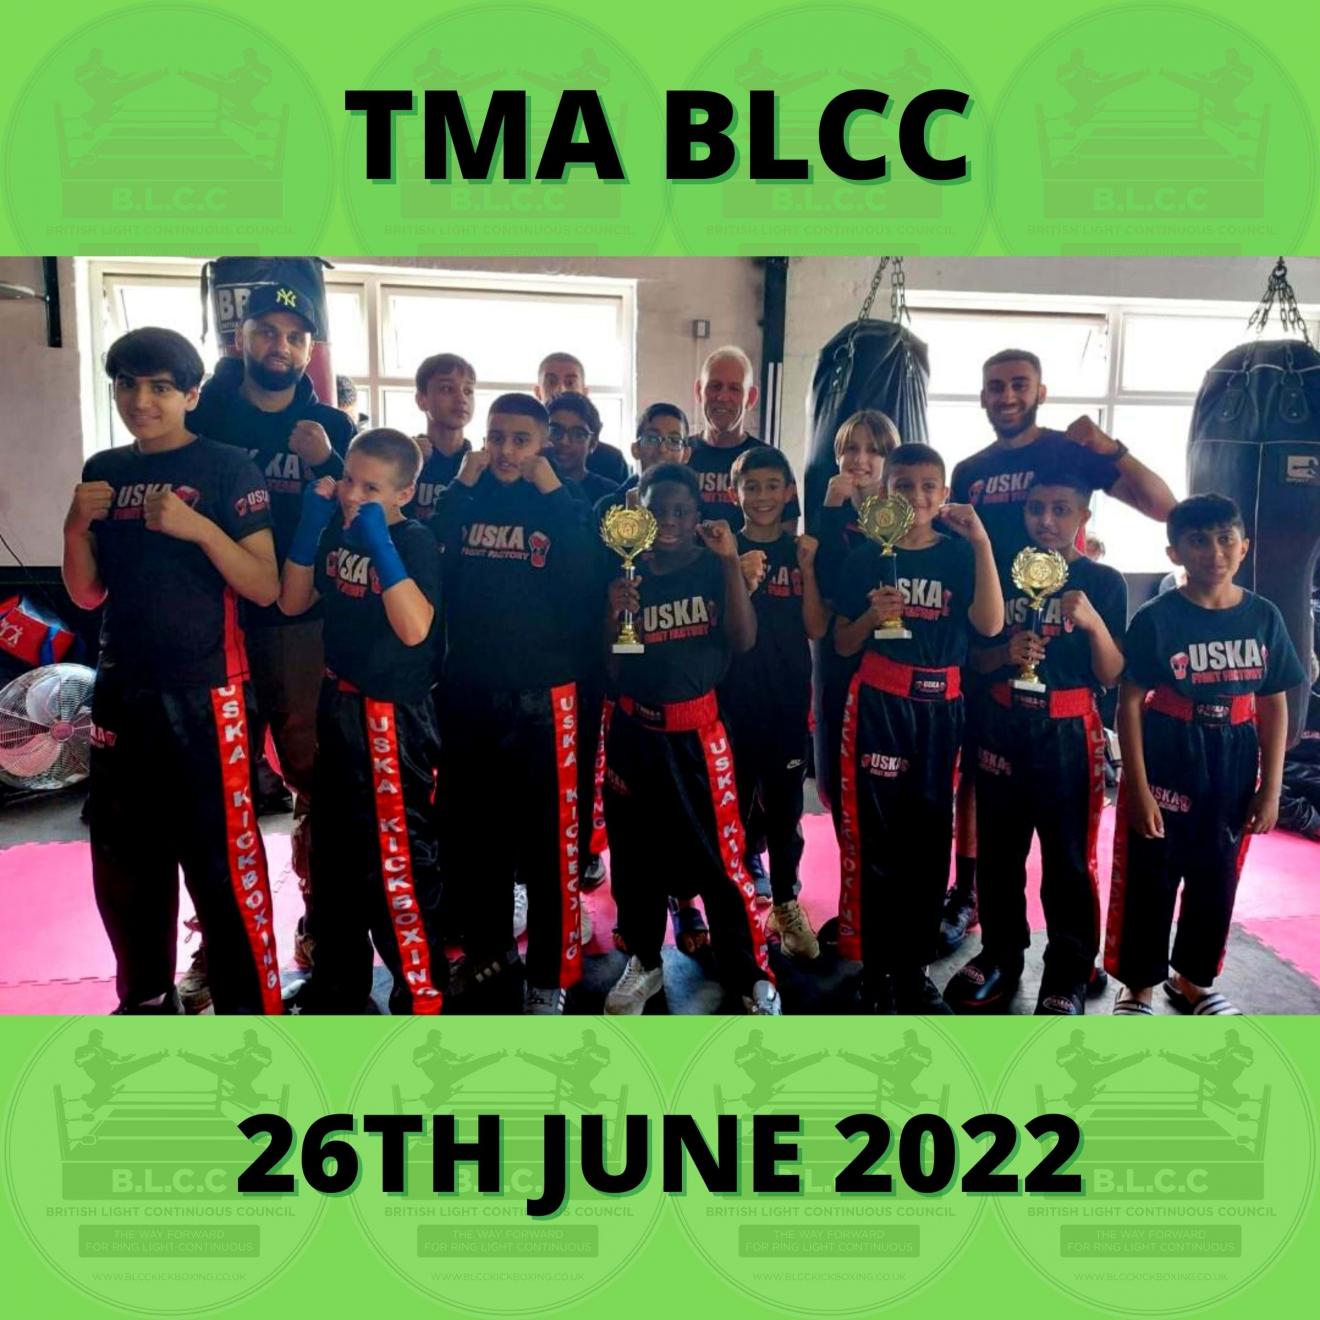 26-06-22 - USKA at the Inaugural TMA BLCC event in Walsall